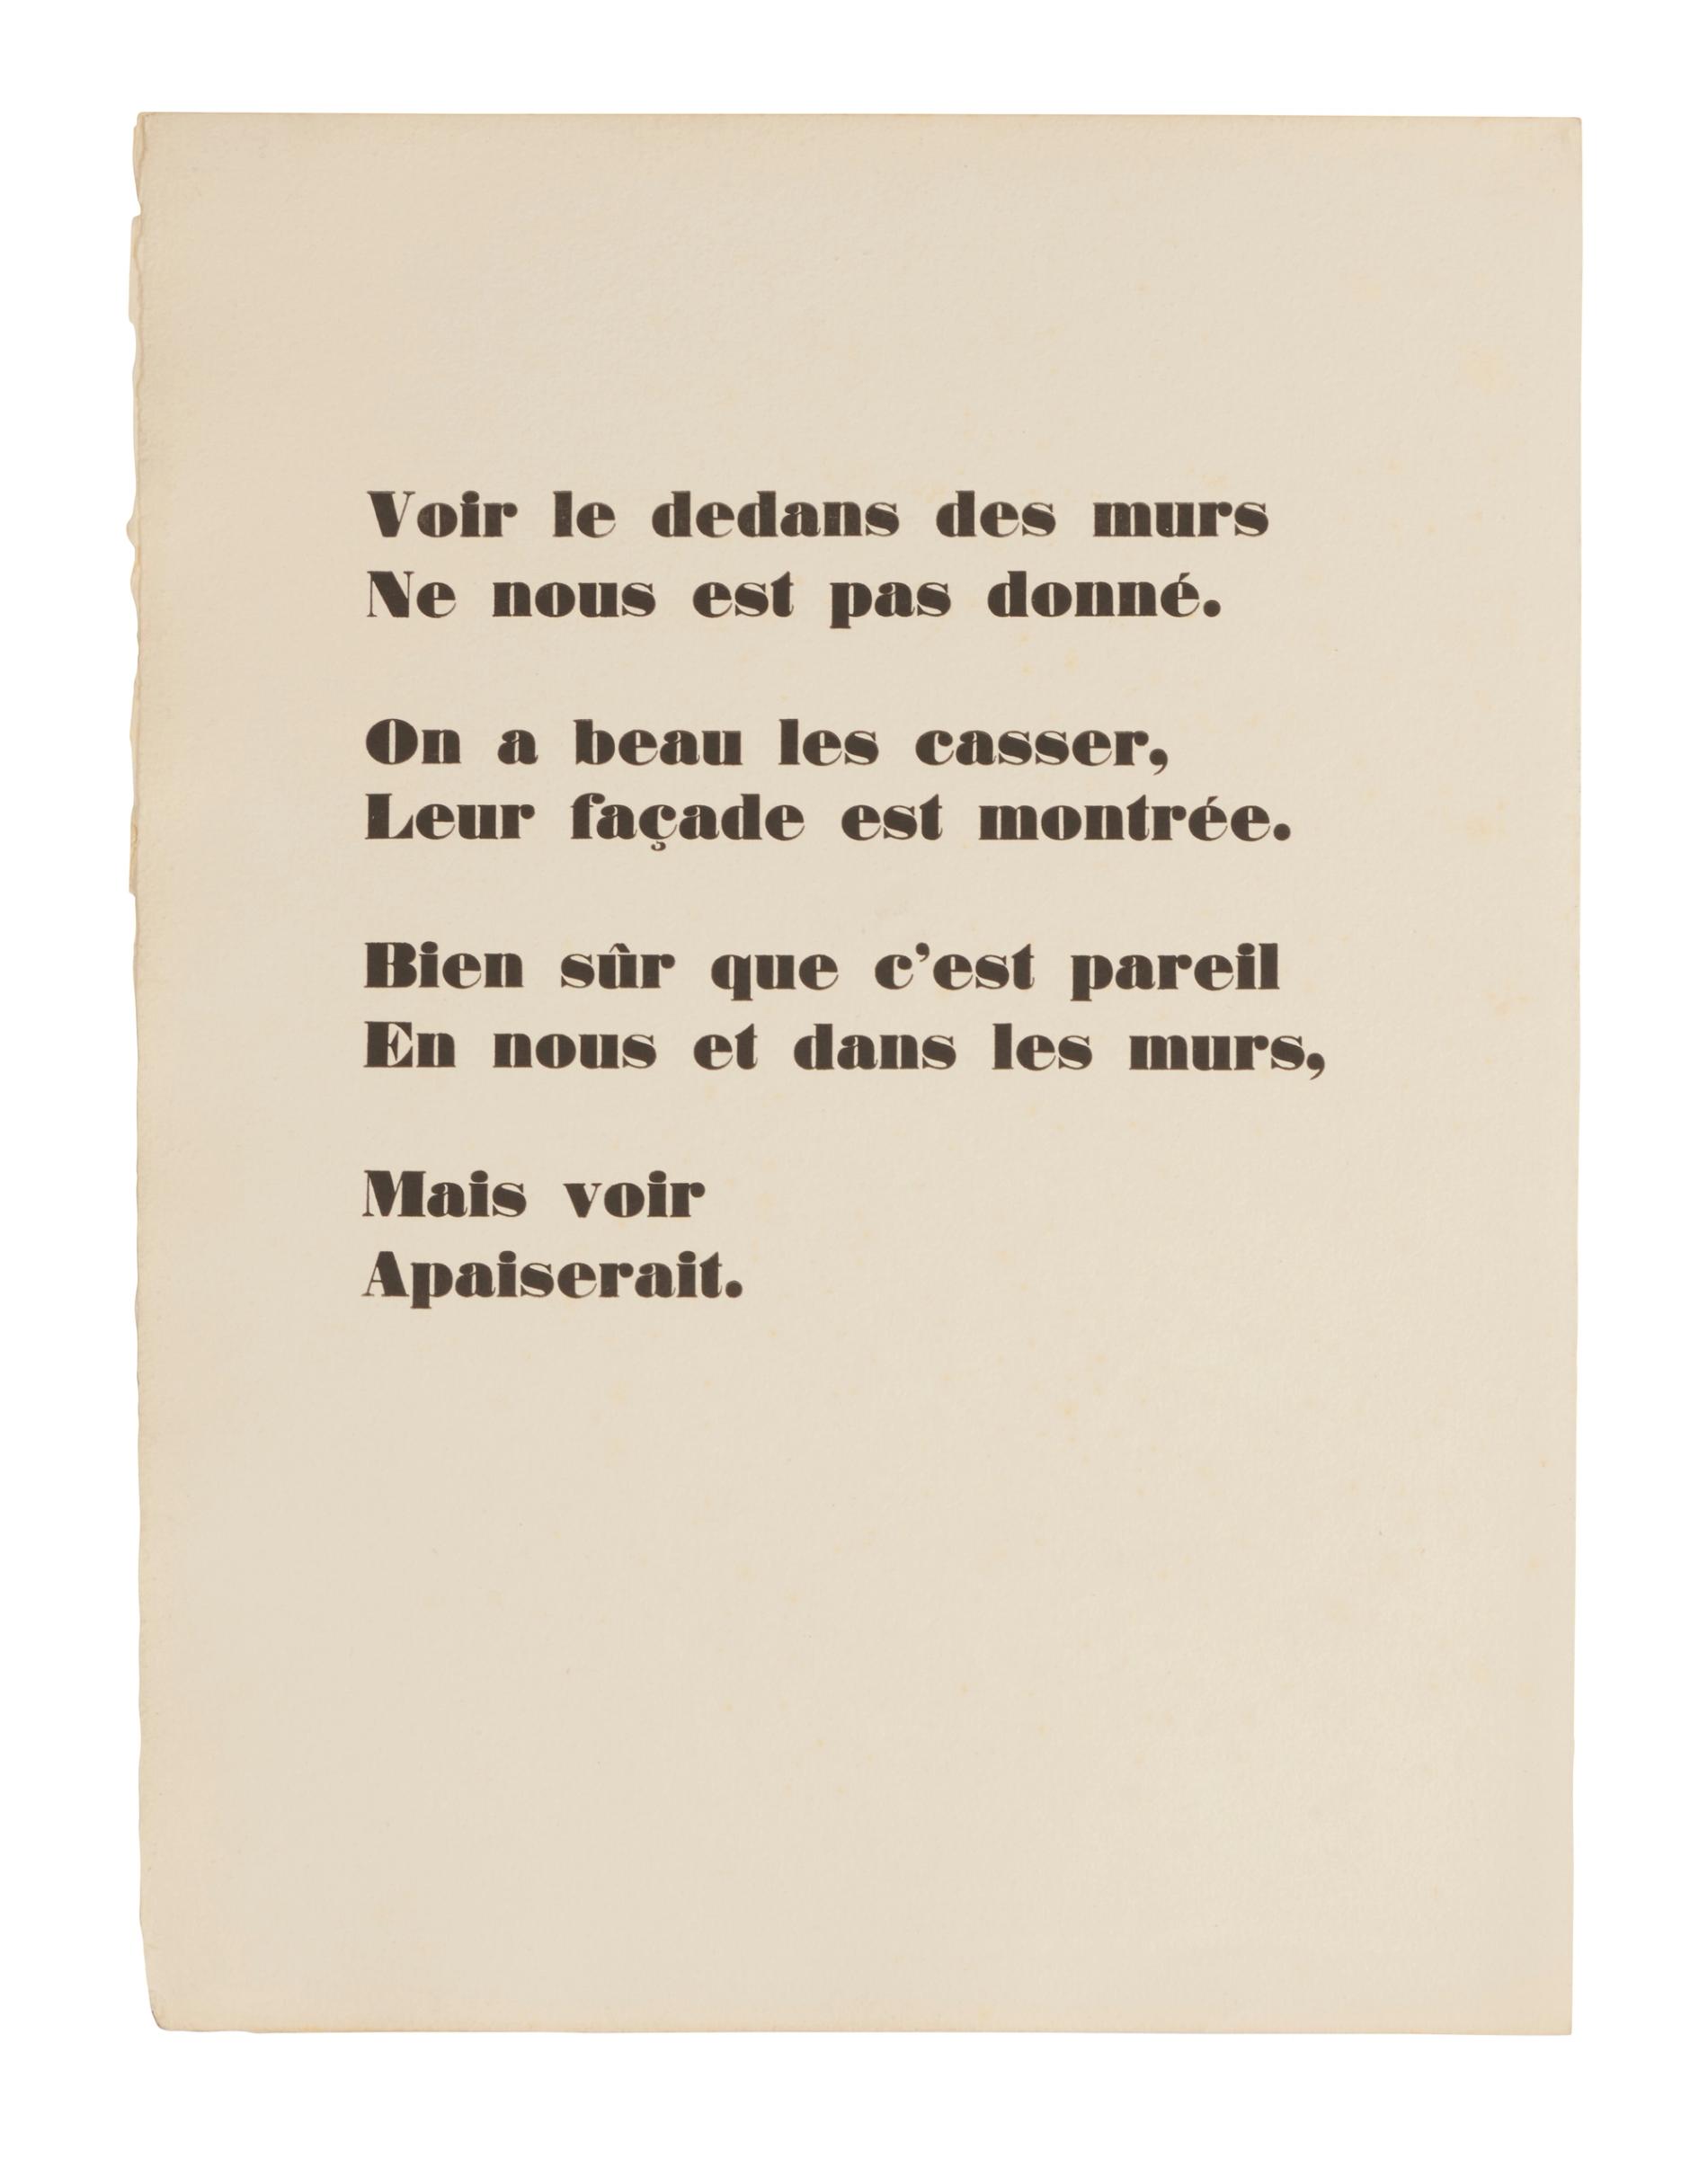 Jean Dubuffet, "Homme et Mur" Lithograph no.7/192, 1950